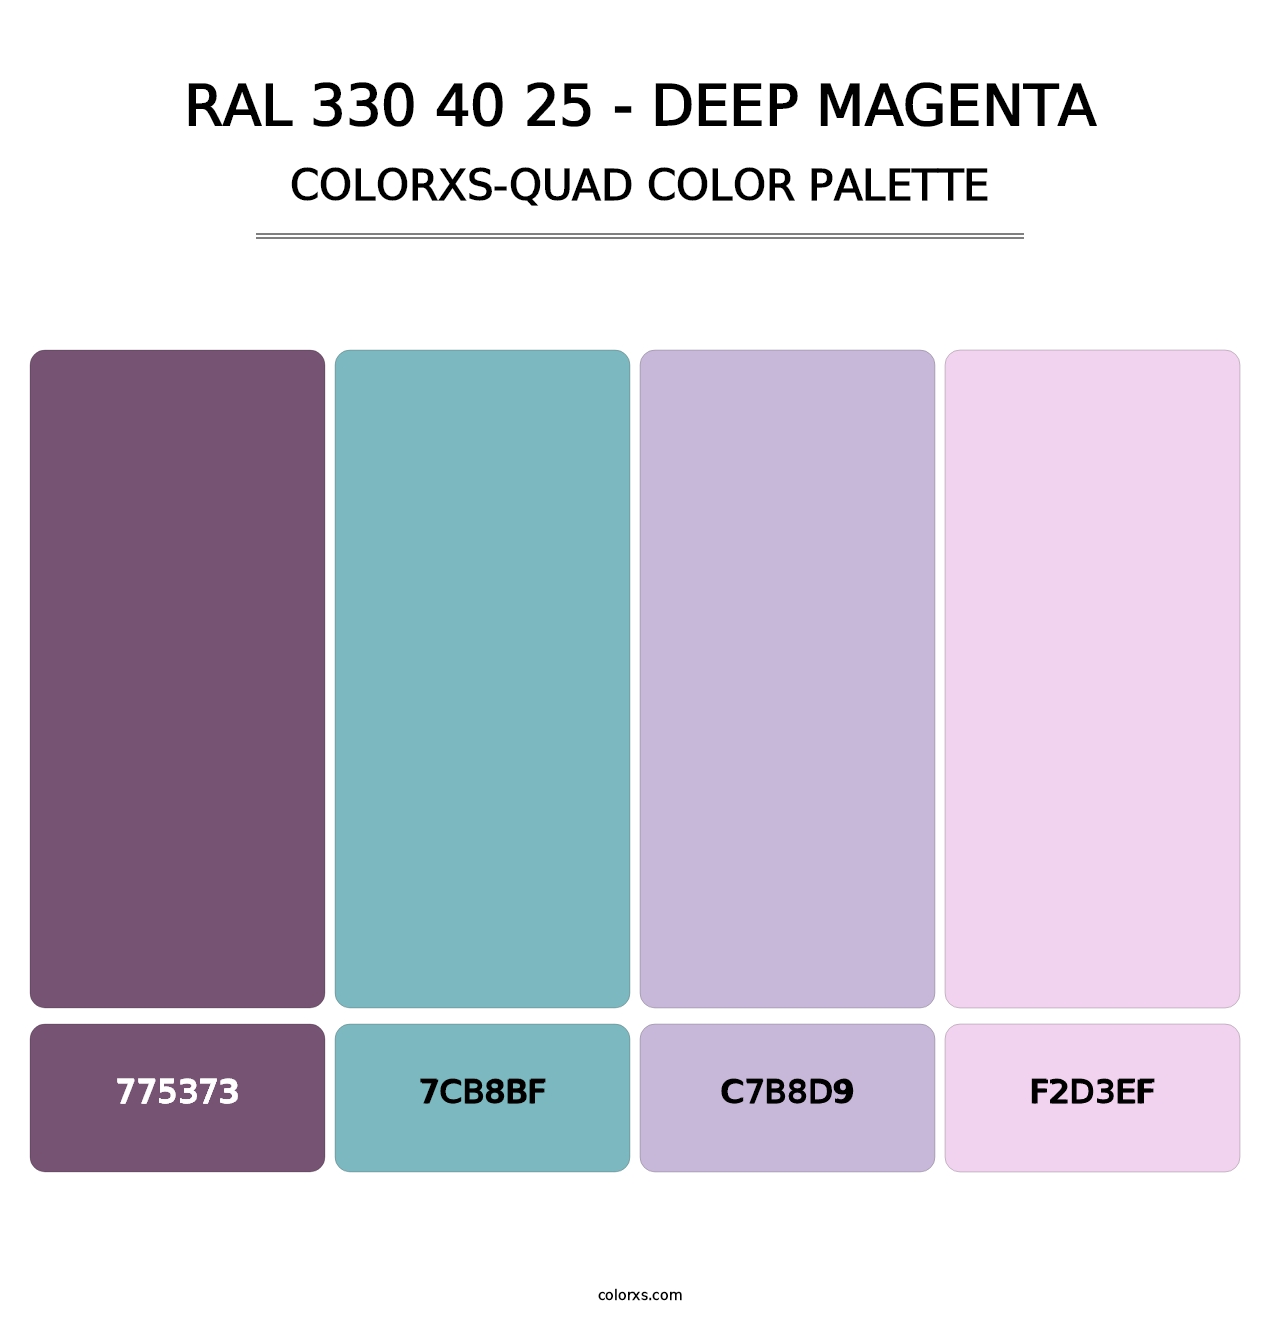 RAL 330 40 25 - Deep Magenta - Colorxs Quad Palette